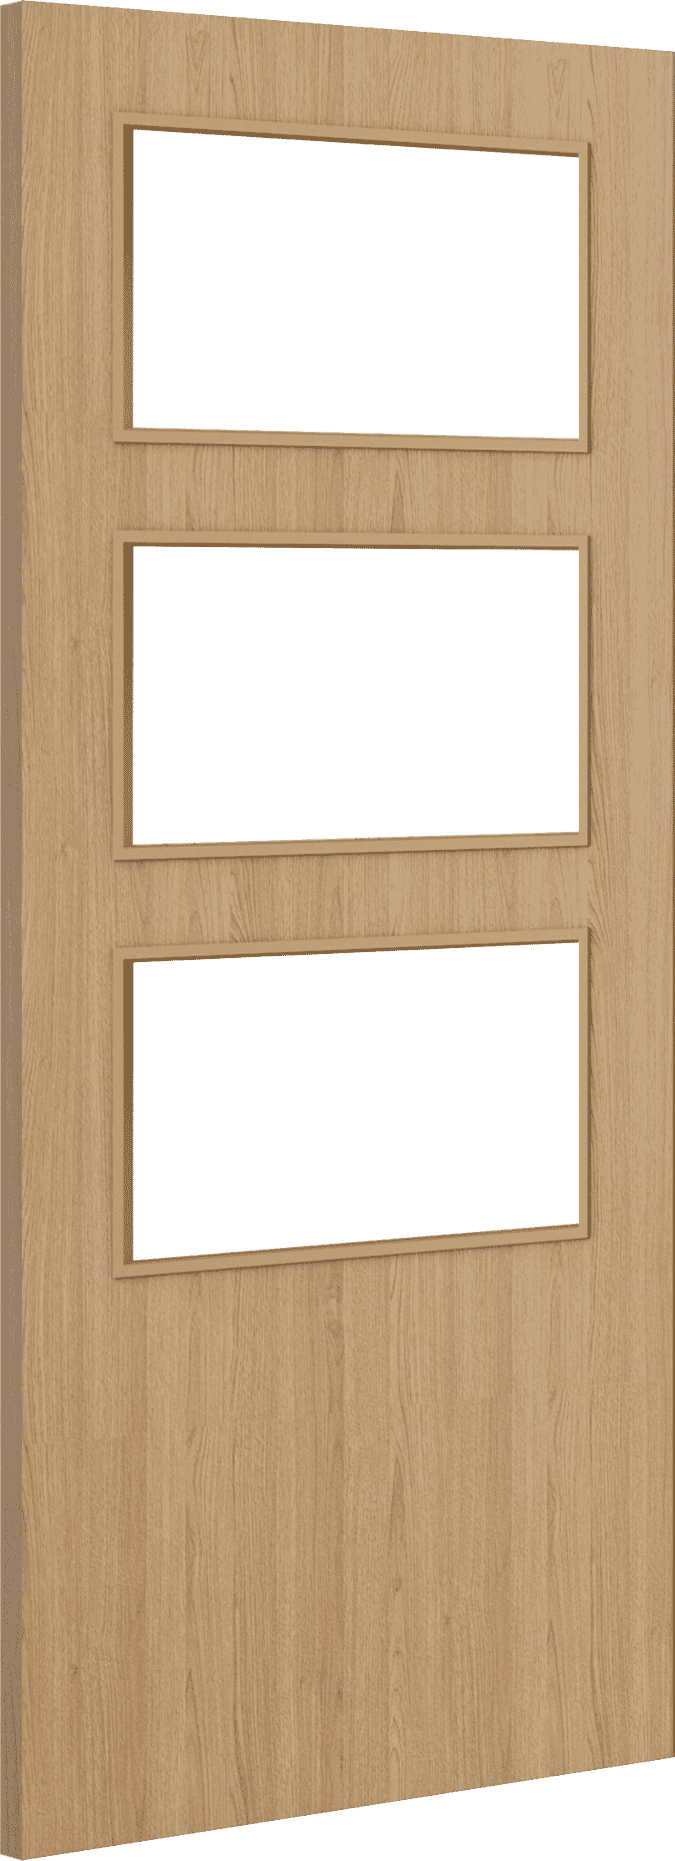 1981mm x 762mm x 44mm (30") Architectural Oak 03 Frosted Glazed - Prefinished FD30 Fire Door Blank